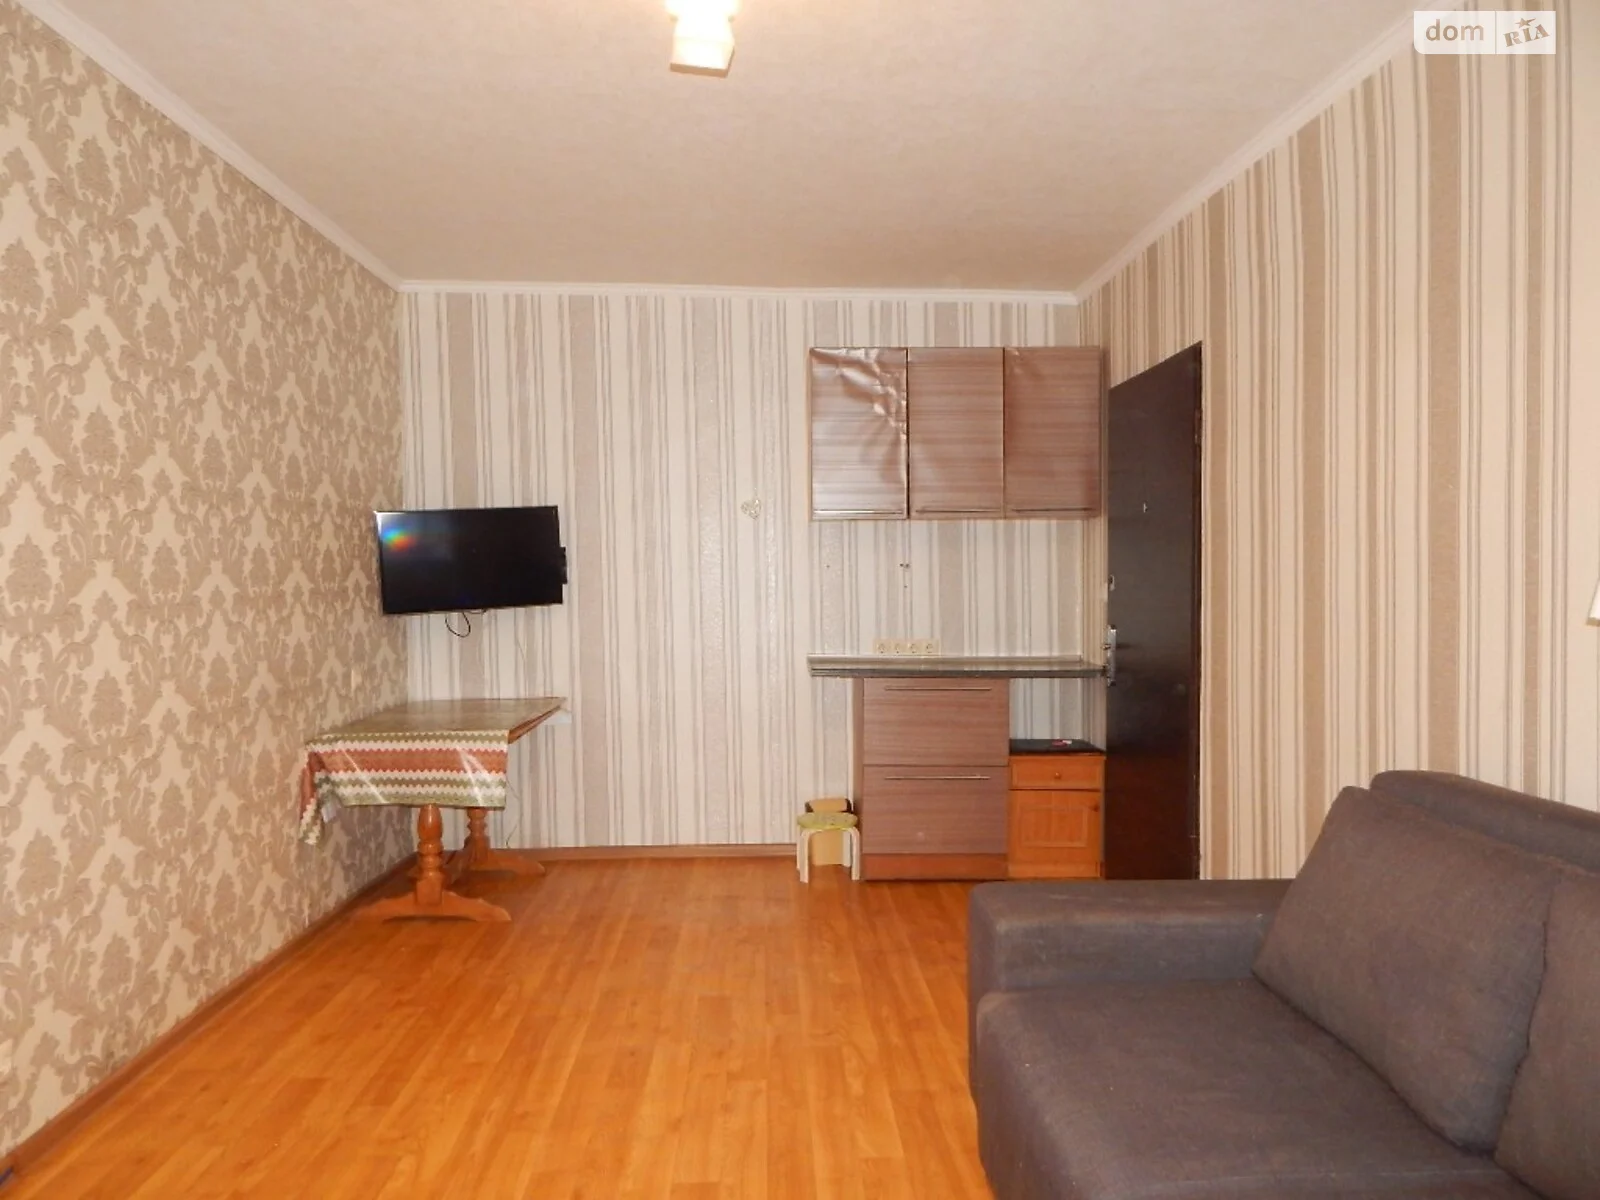 Продается комната 24.5 кв. м в Харькове - фото 3